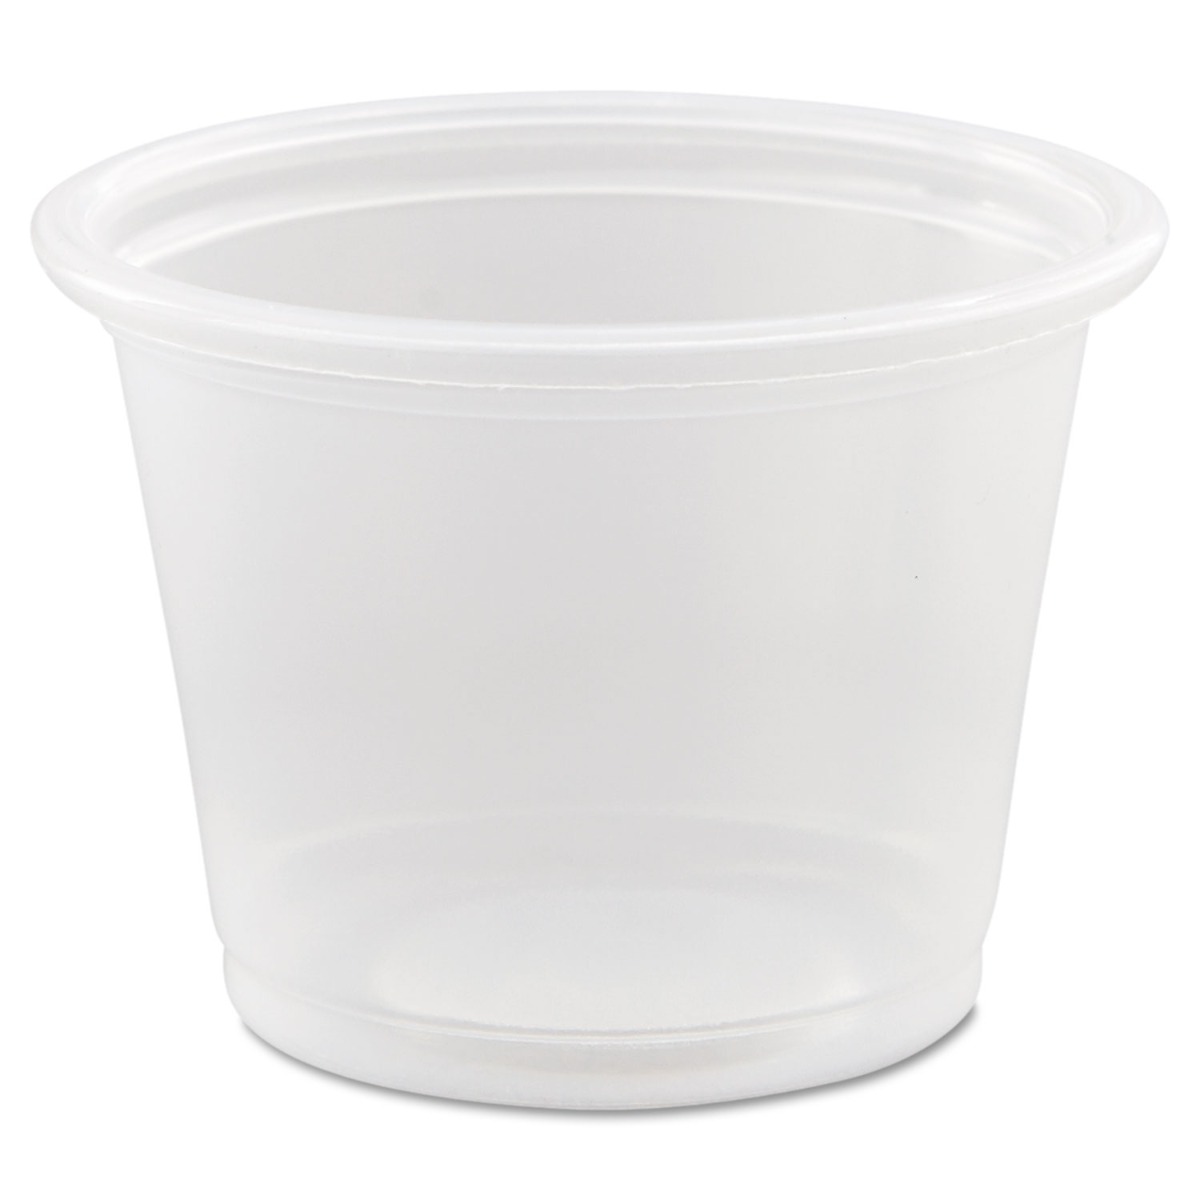 1 oz. Plastic Portion Cups (Clear) - 2500/Case